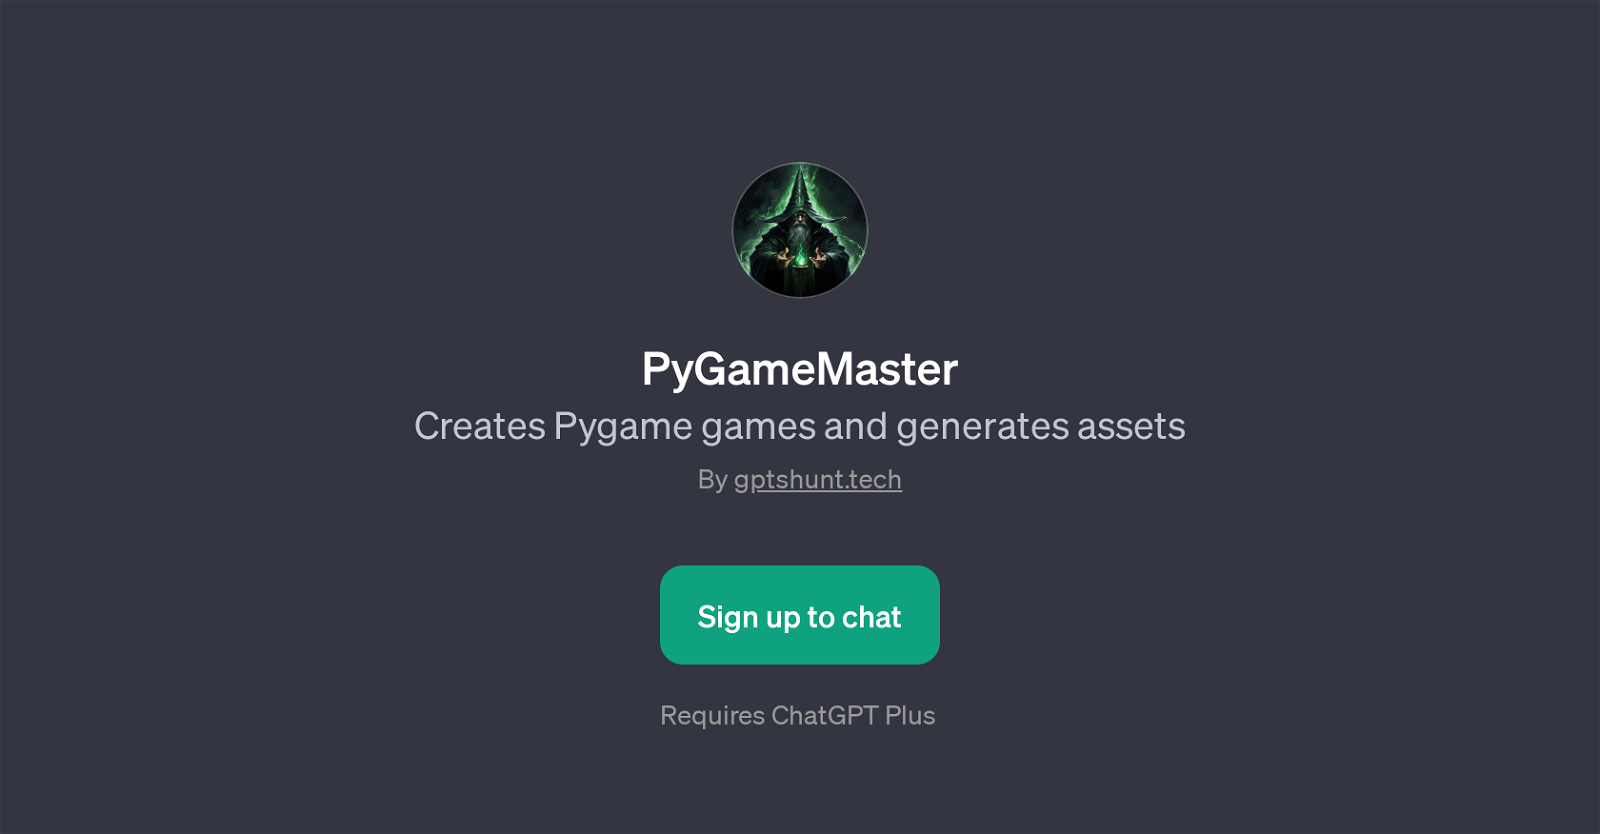 PyGameMaster website